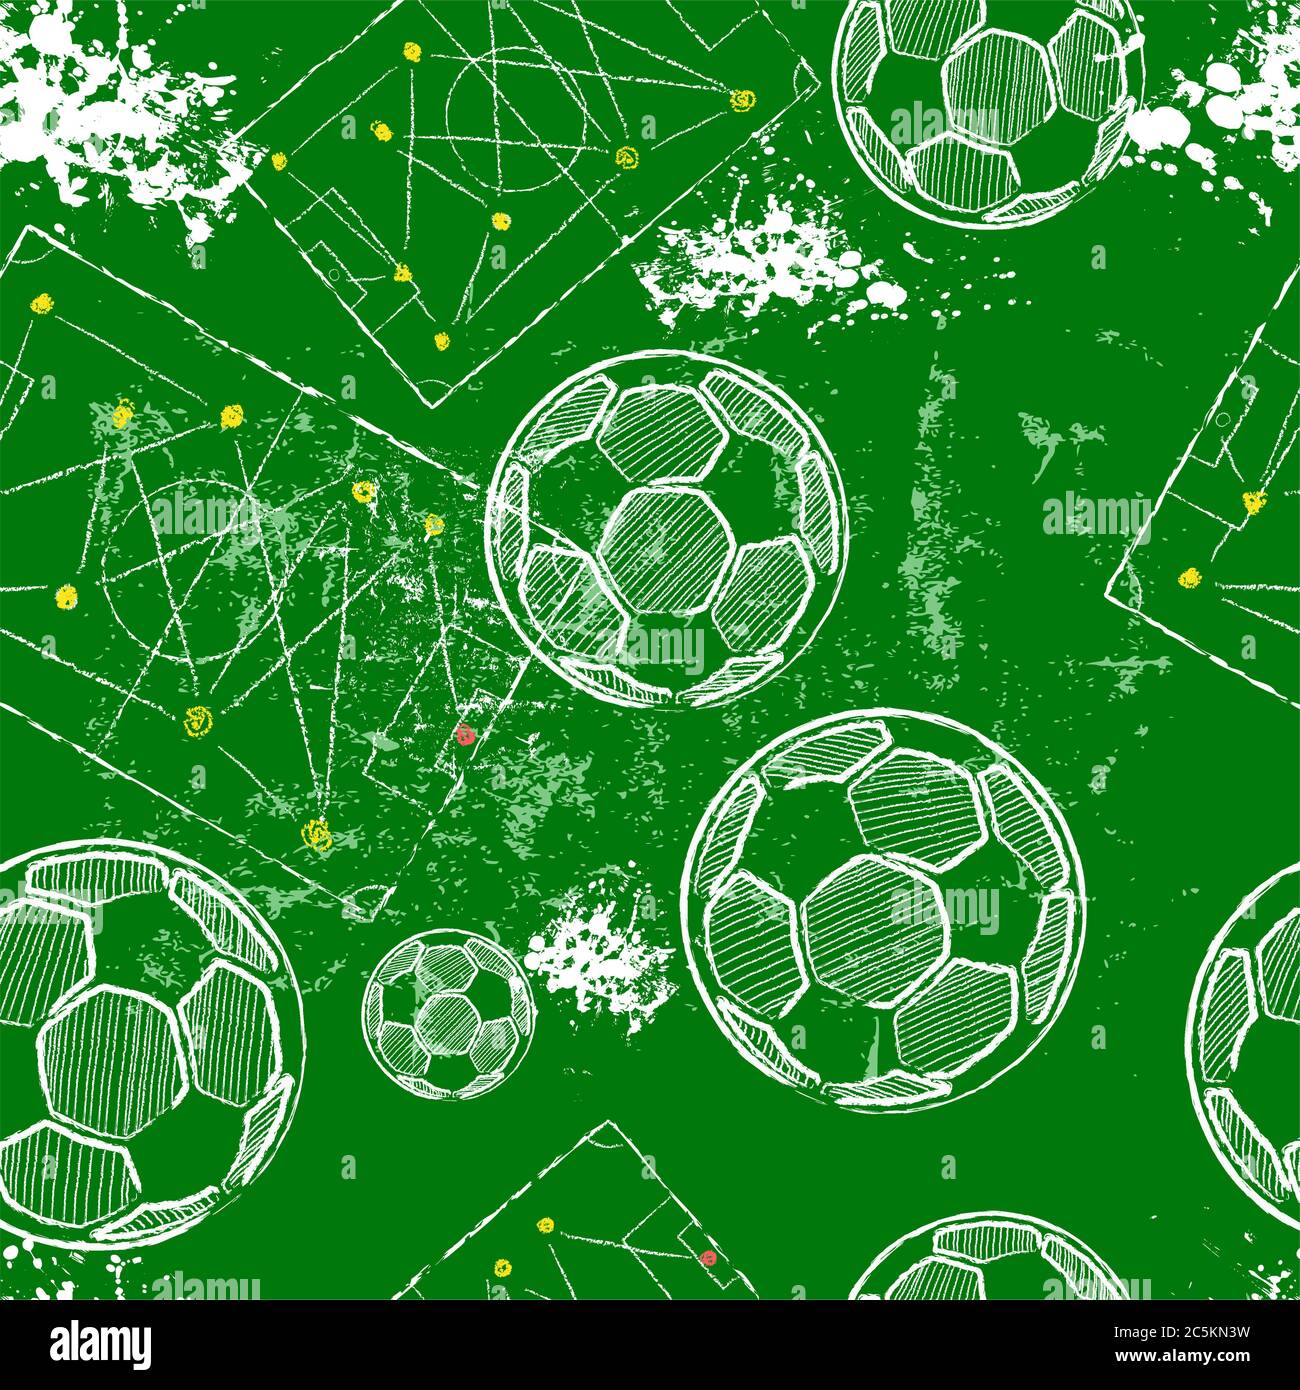 Soccer Net Pattern Images – Browse 14,832 Stock Photos, Vectors